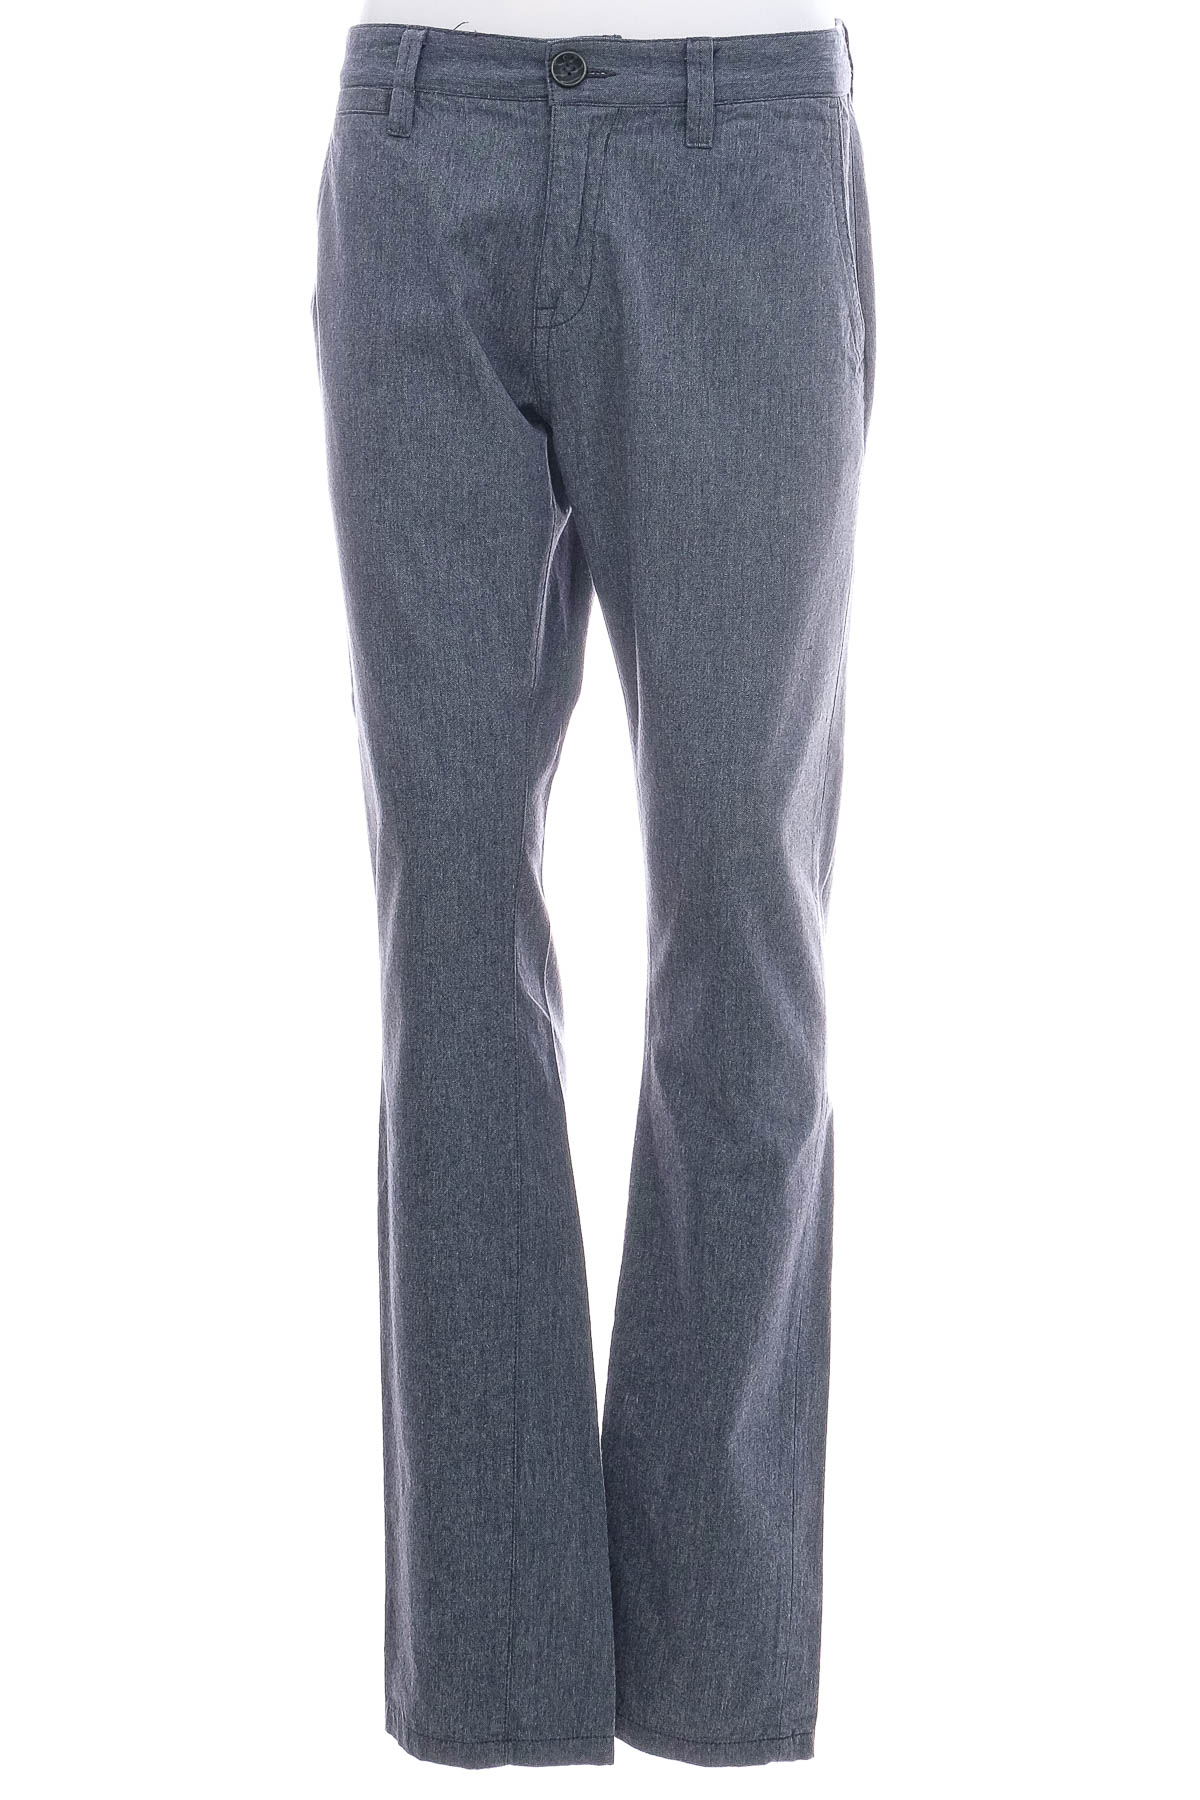 Men's trousers - TOM TAILOR - 0